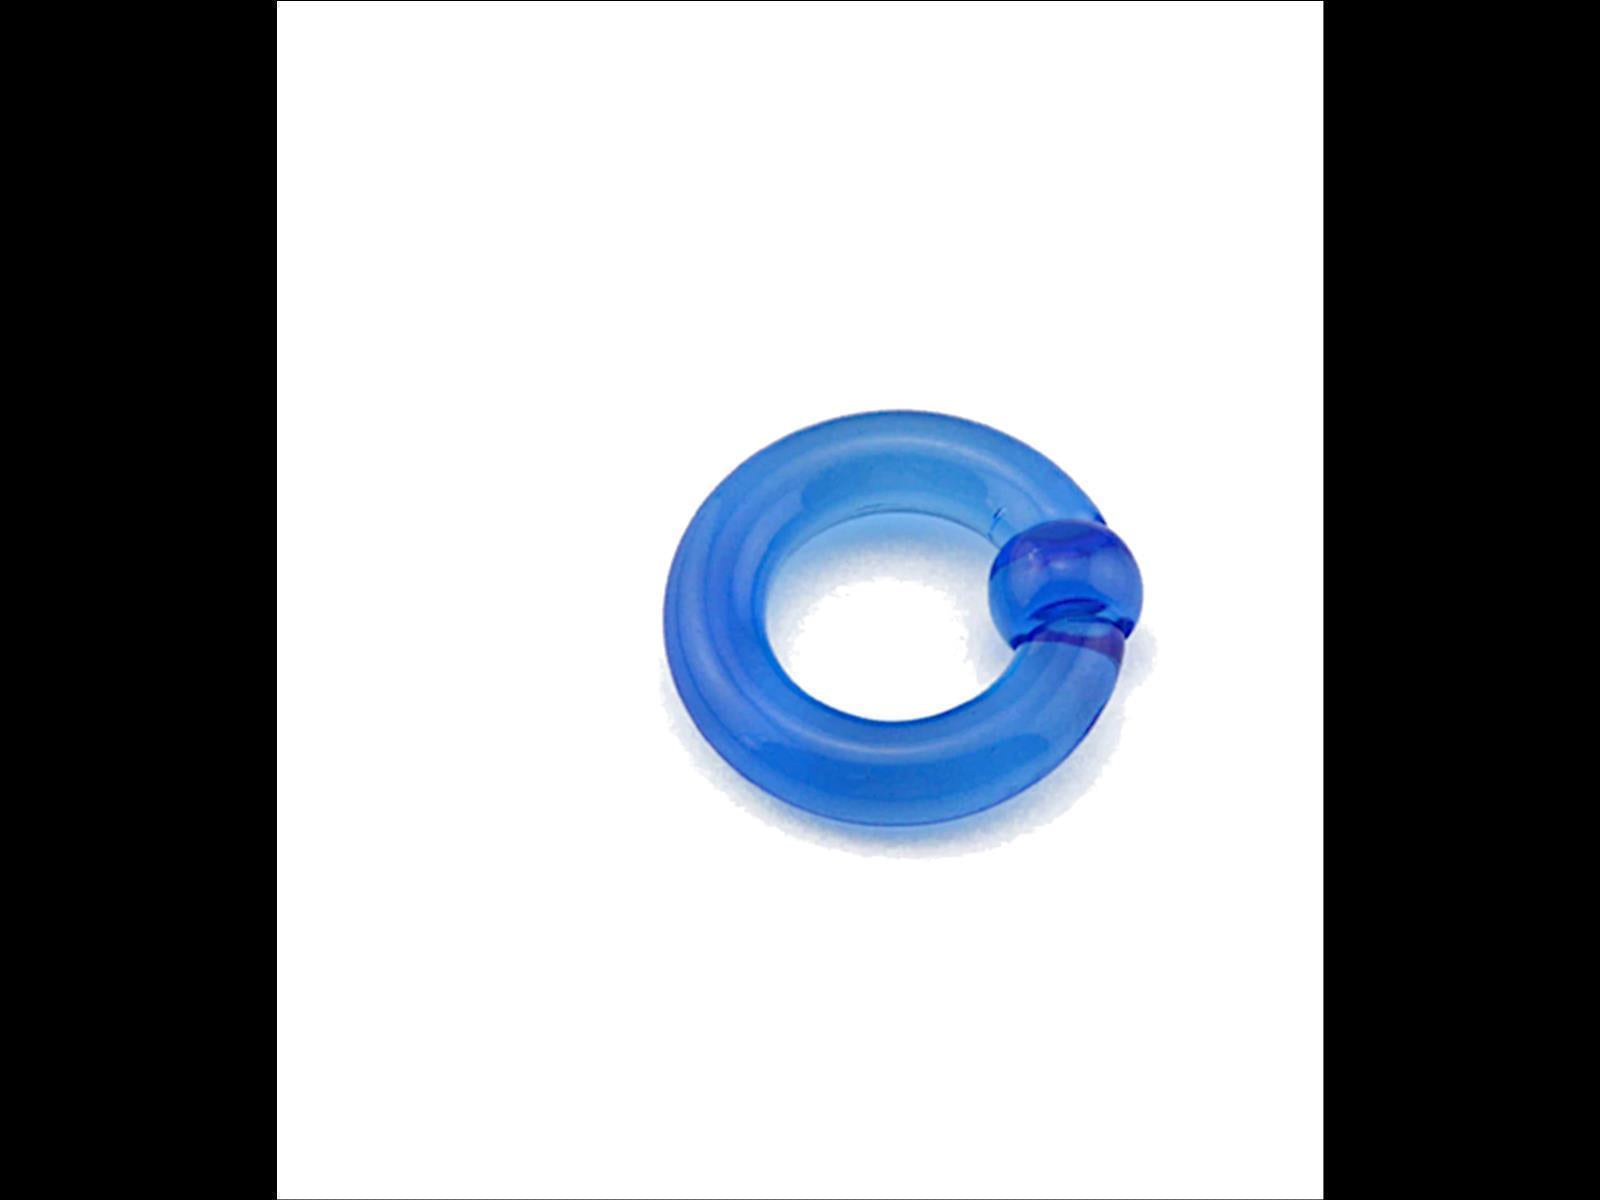 Ball+Closure+Piercing+Klemmkugel+Ring+blau+Acryl